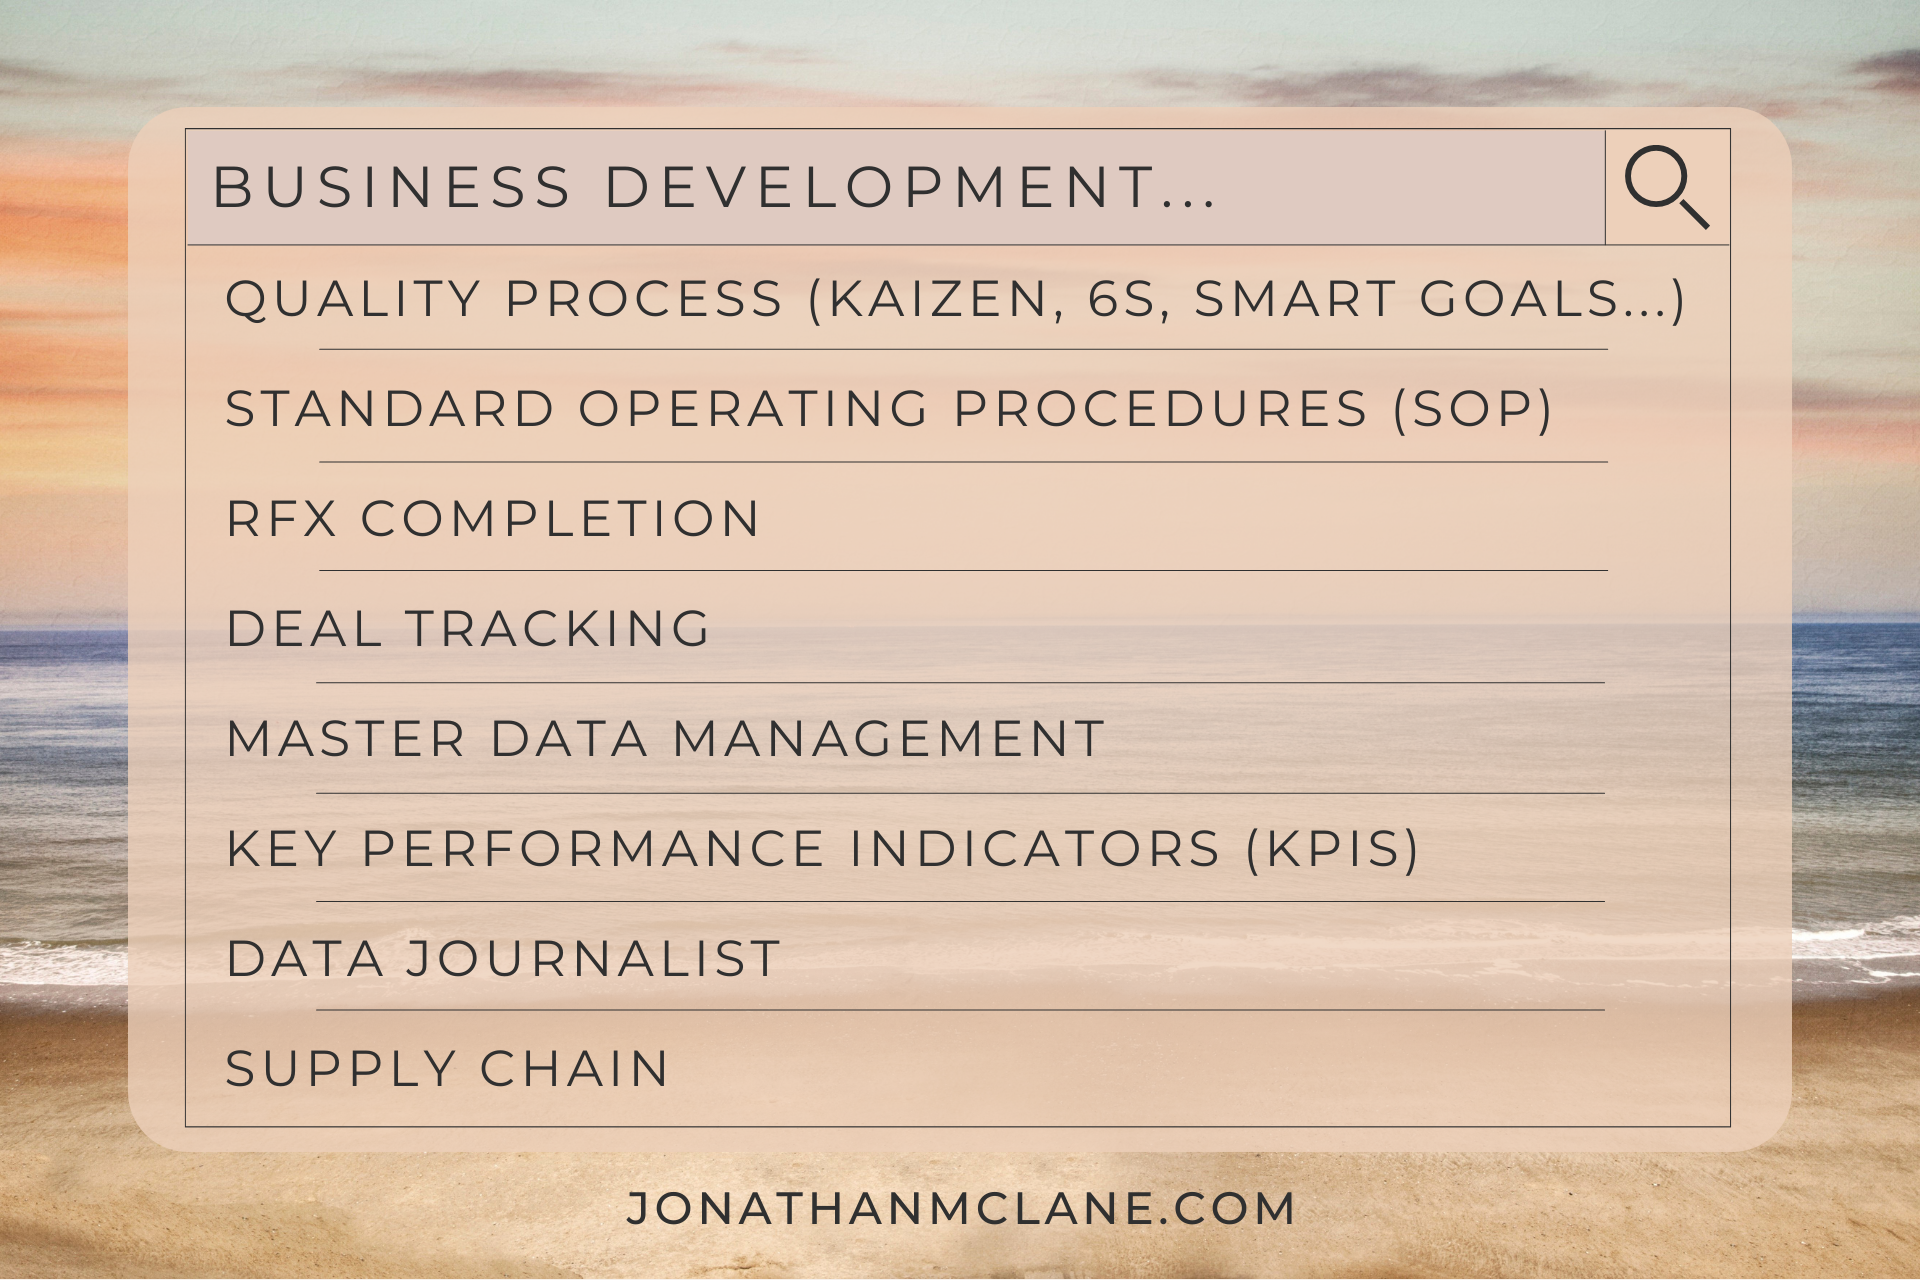 Business Development, Quality Process (Kaizen, 6S, SMART goals, more), Standard Operating Procedures (SOP), RFx Completion, Deal Tracking, Master Data Management, Key Performance Indicators (KPIs), Data Journalist, Supply Chain